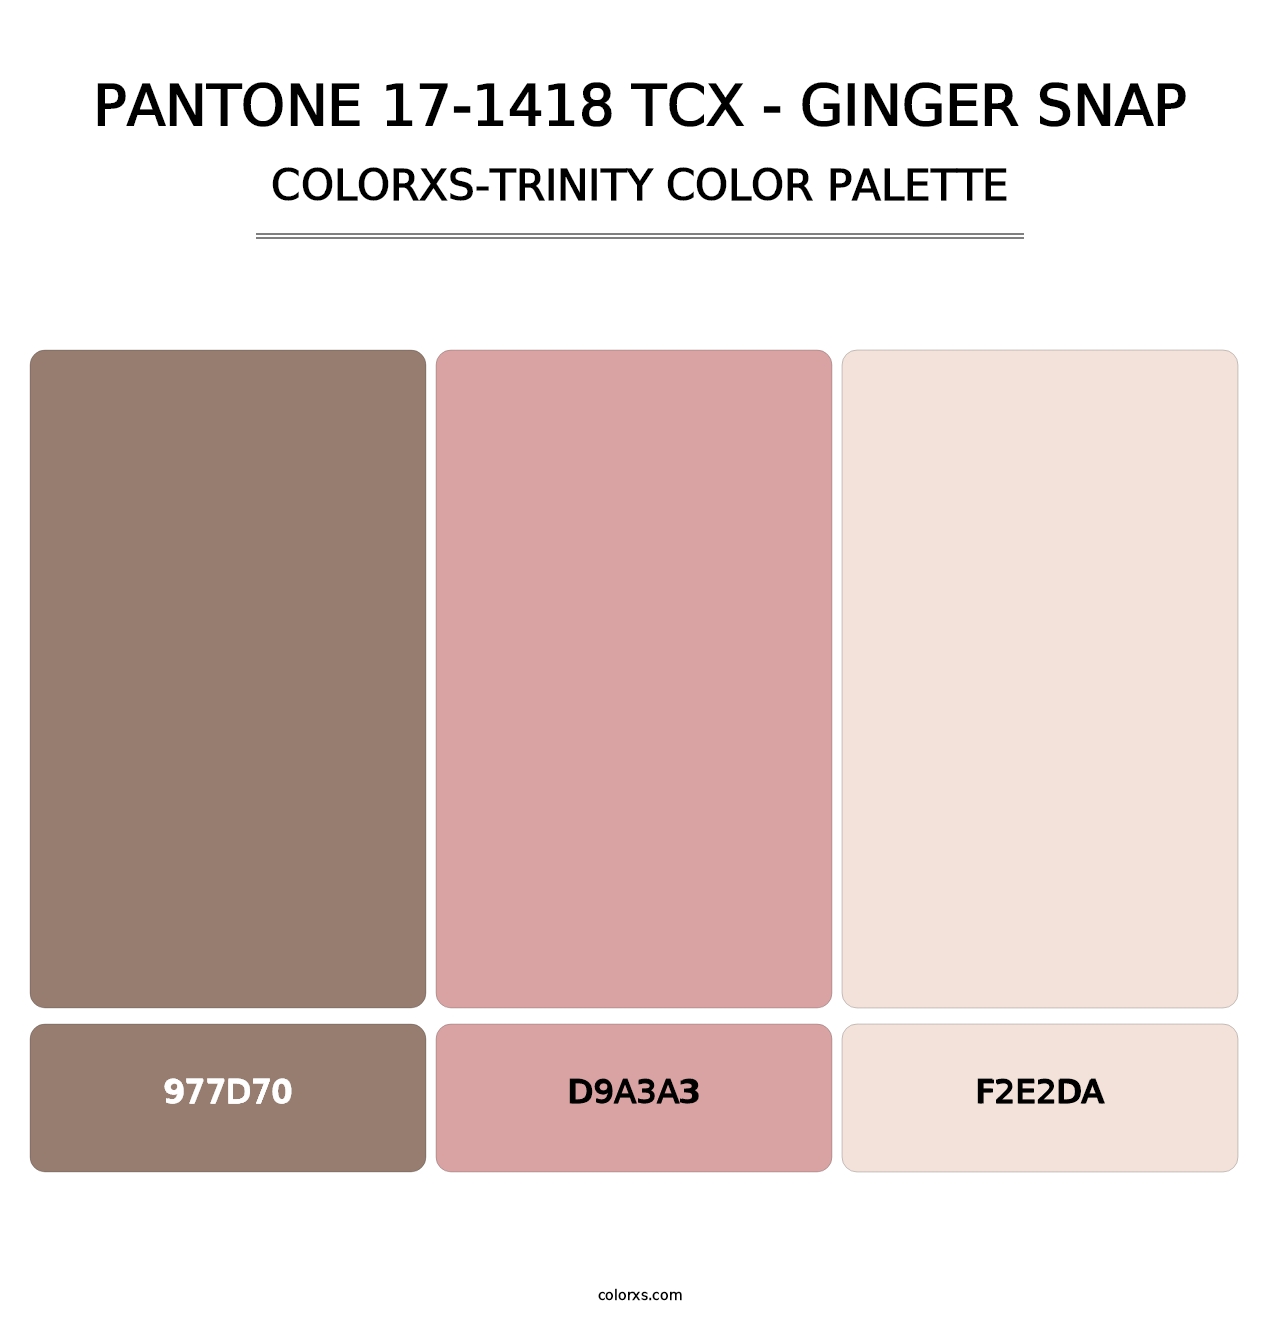 PANTONE 17-1418 TCX - Ginger Snap - Colorxs Trinity Palette